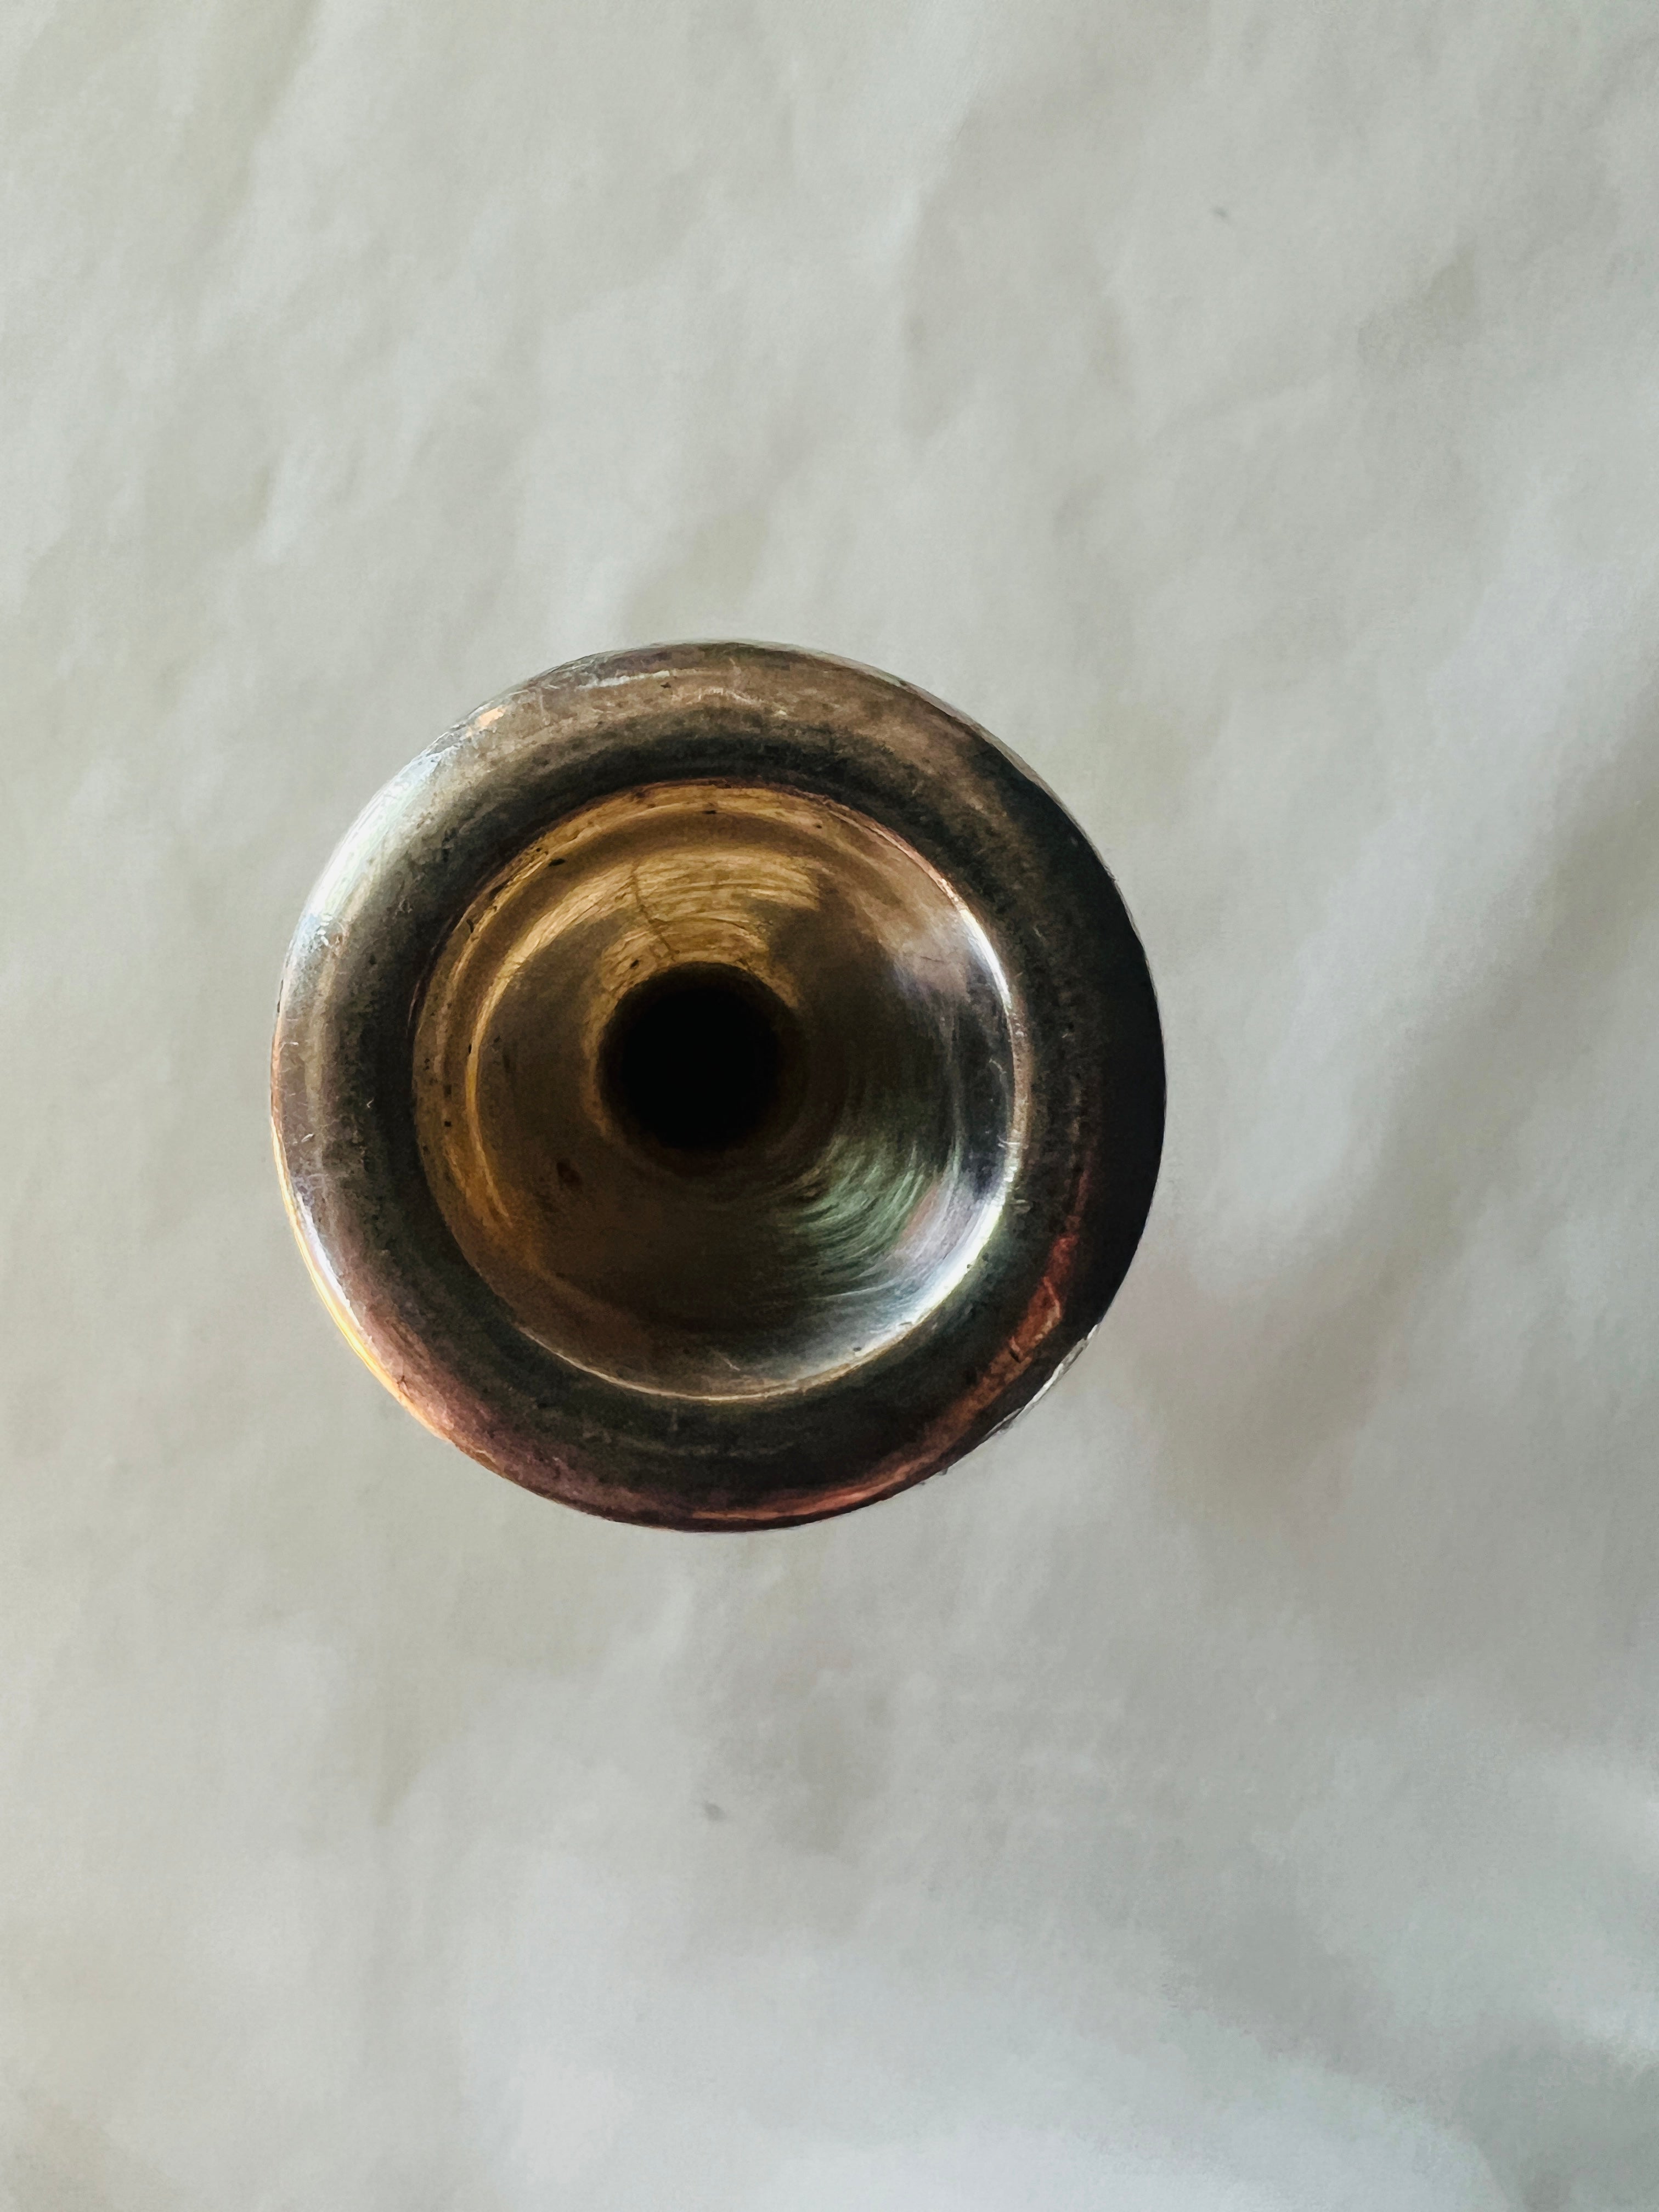 Irving R. BUSH WX3 JRK Custom Trumpet Mouthpiece USED